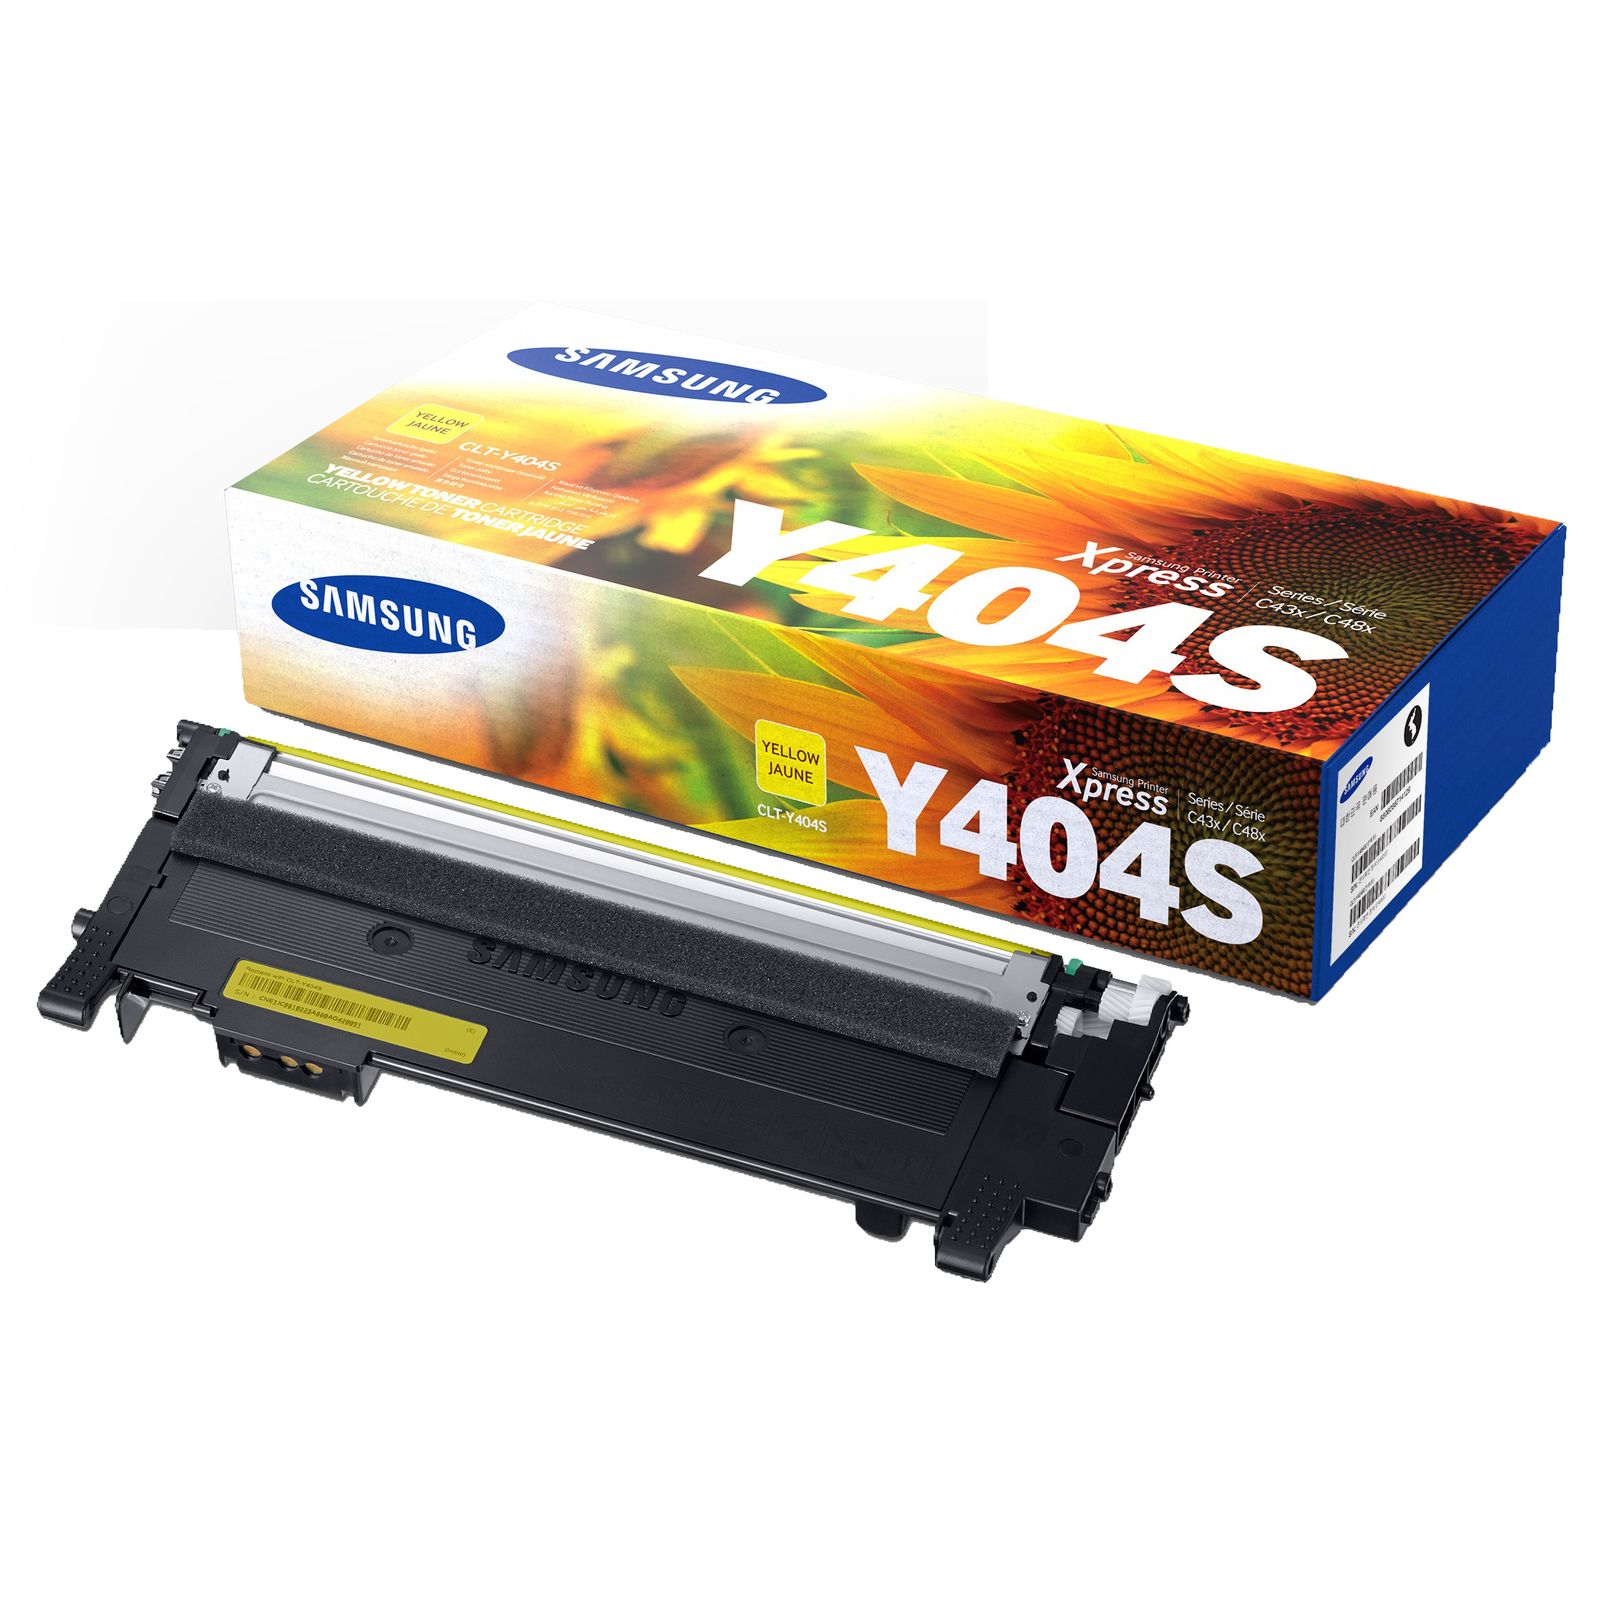 Samsung Yellow Samsung CLT-Y404S Toner Cartridge (SU444A) Printer Cartridge